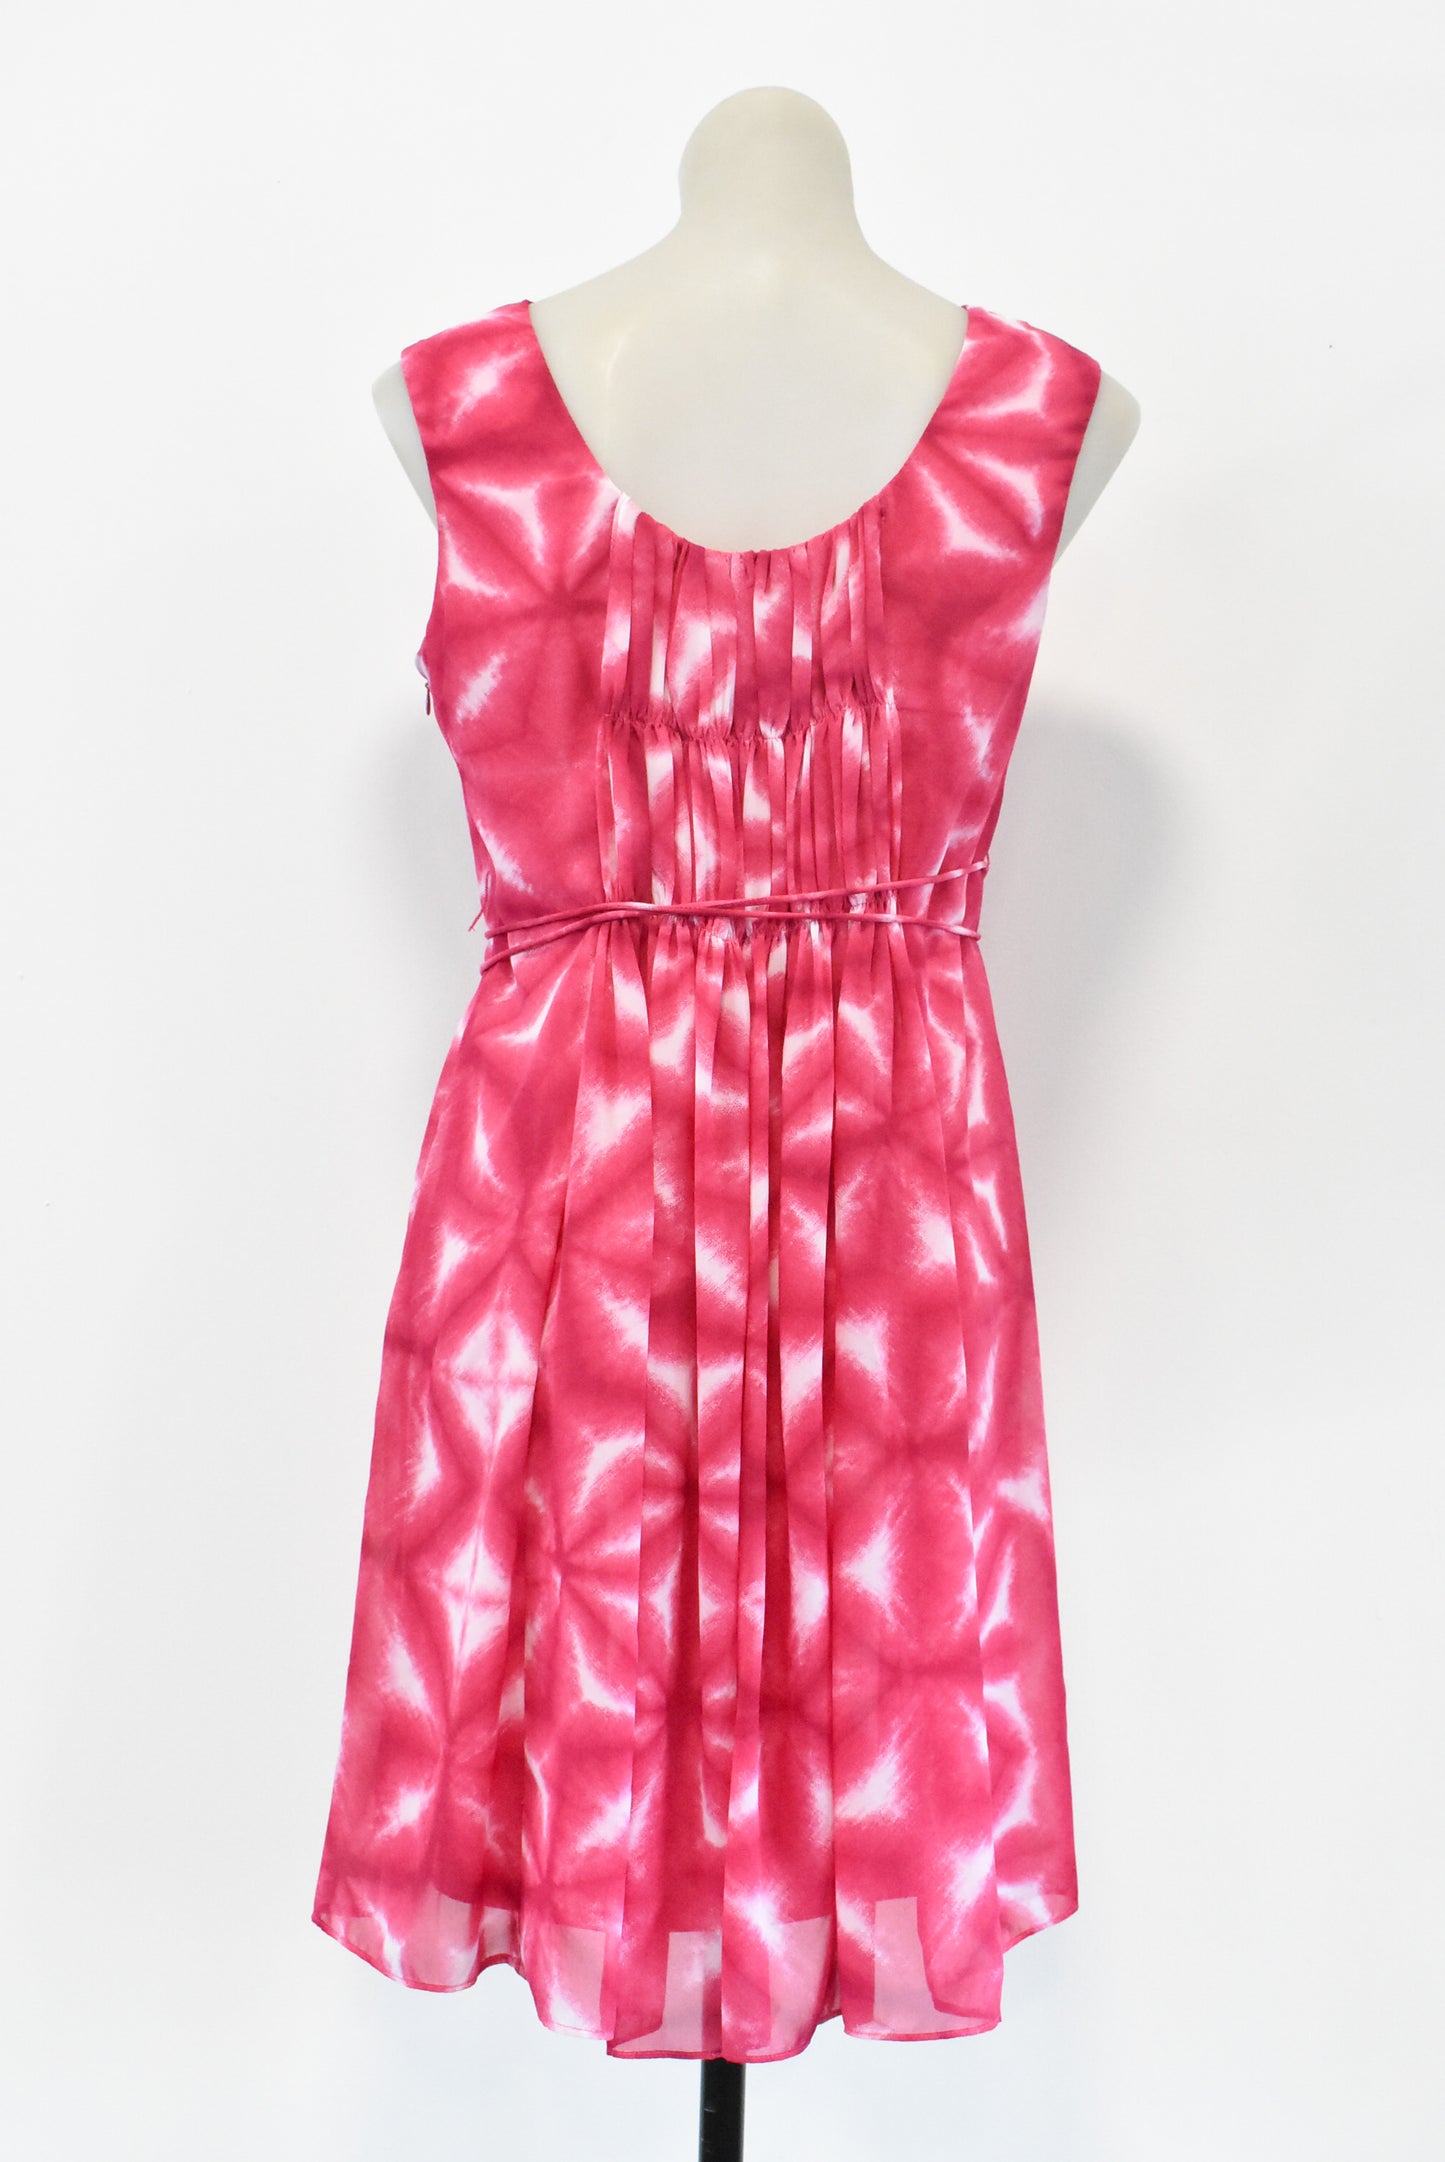 Calvin Klein, gathered A-line dress, 12 (NWT)